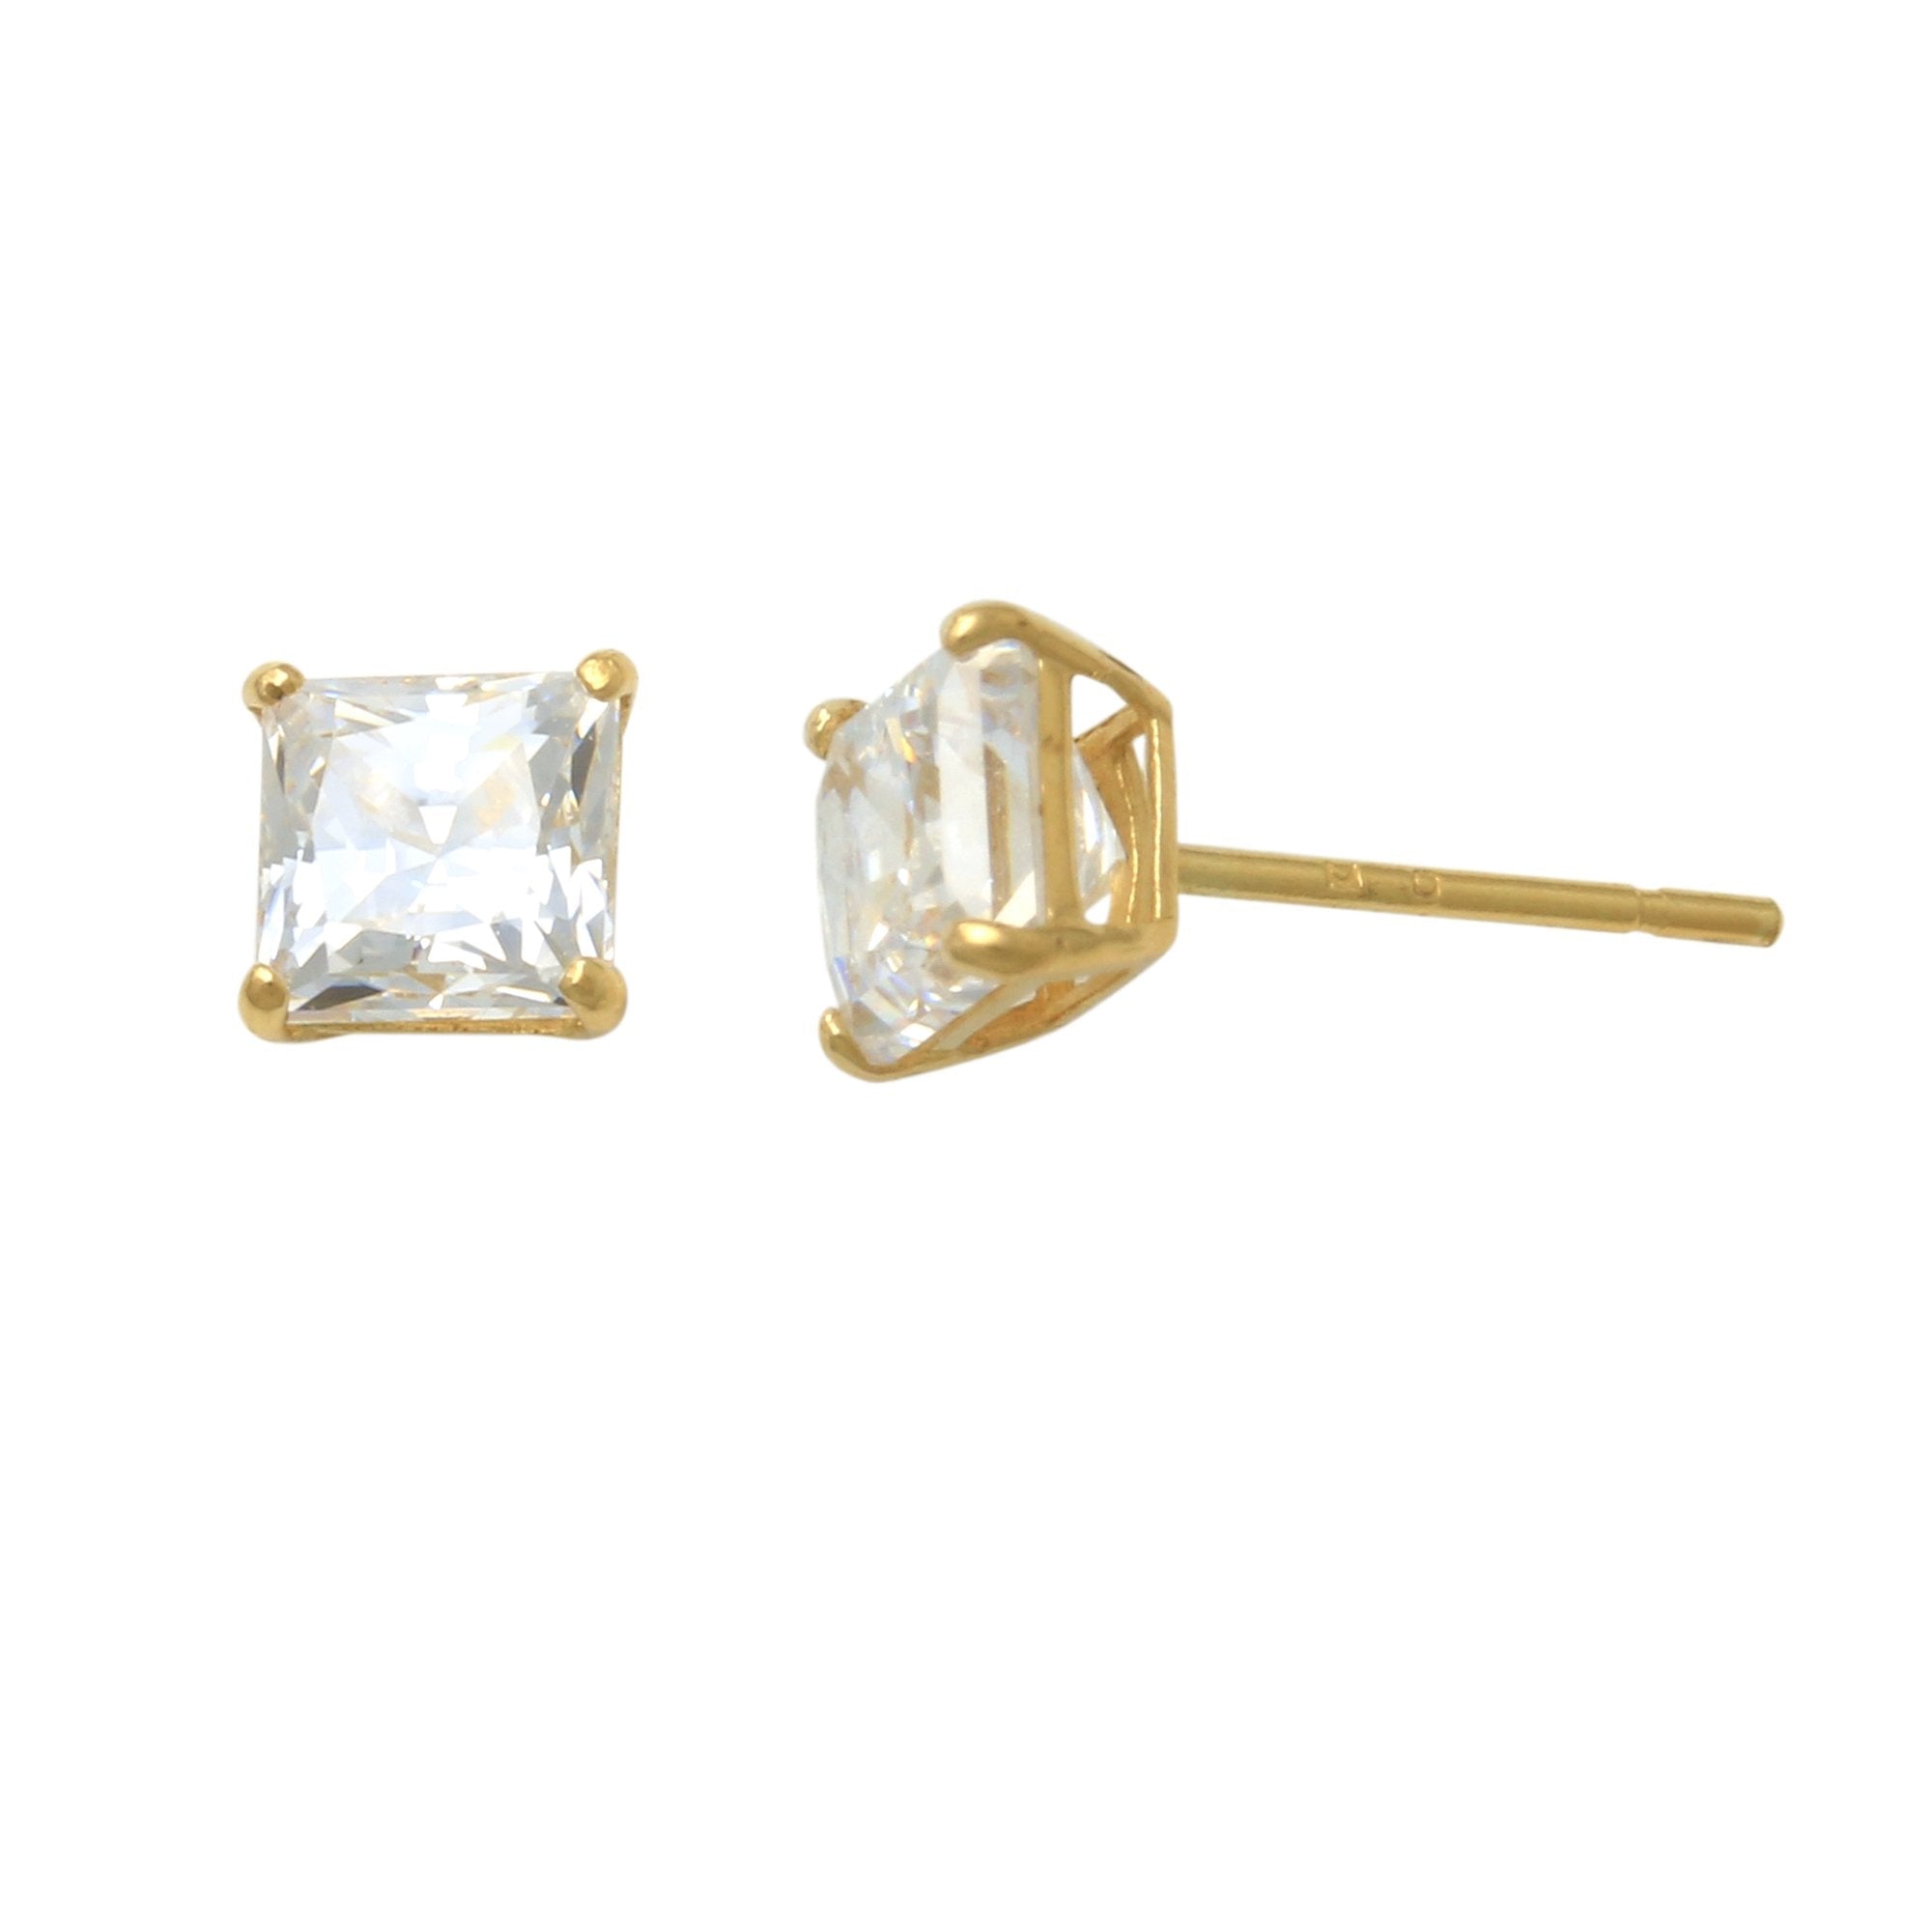 Buy Yellow Gold Square Basic CZ Stud Earrings